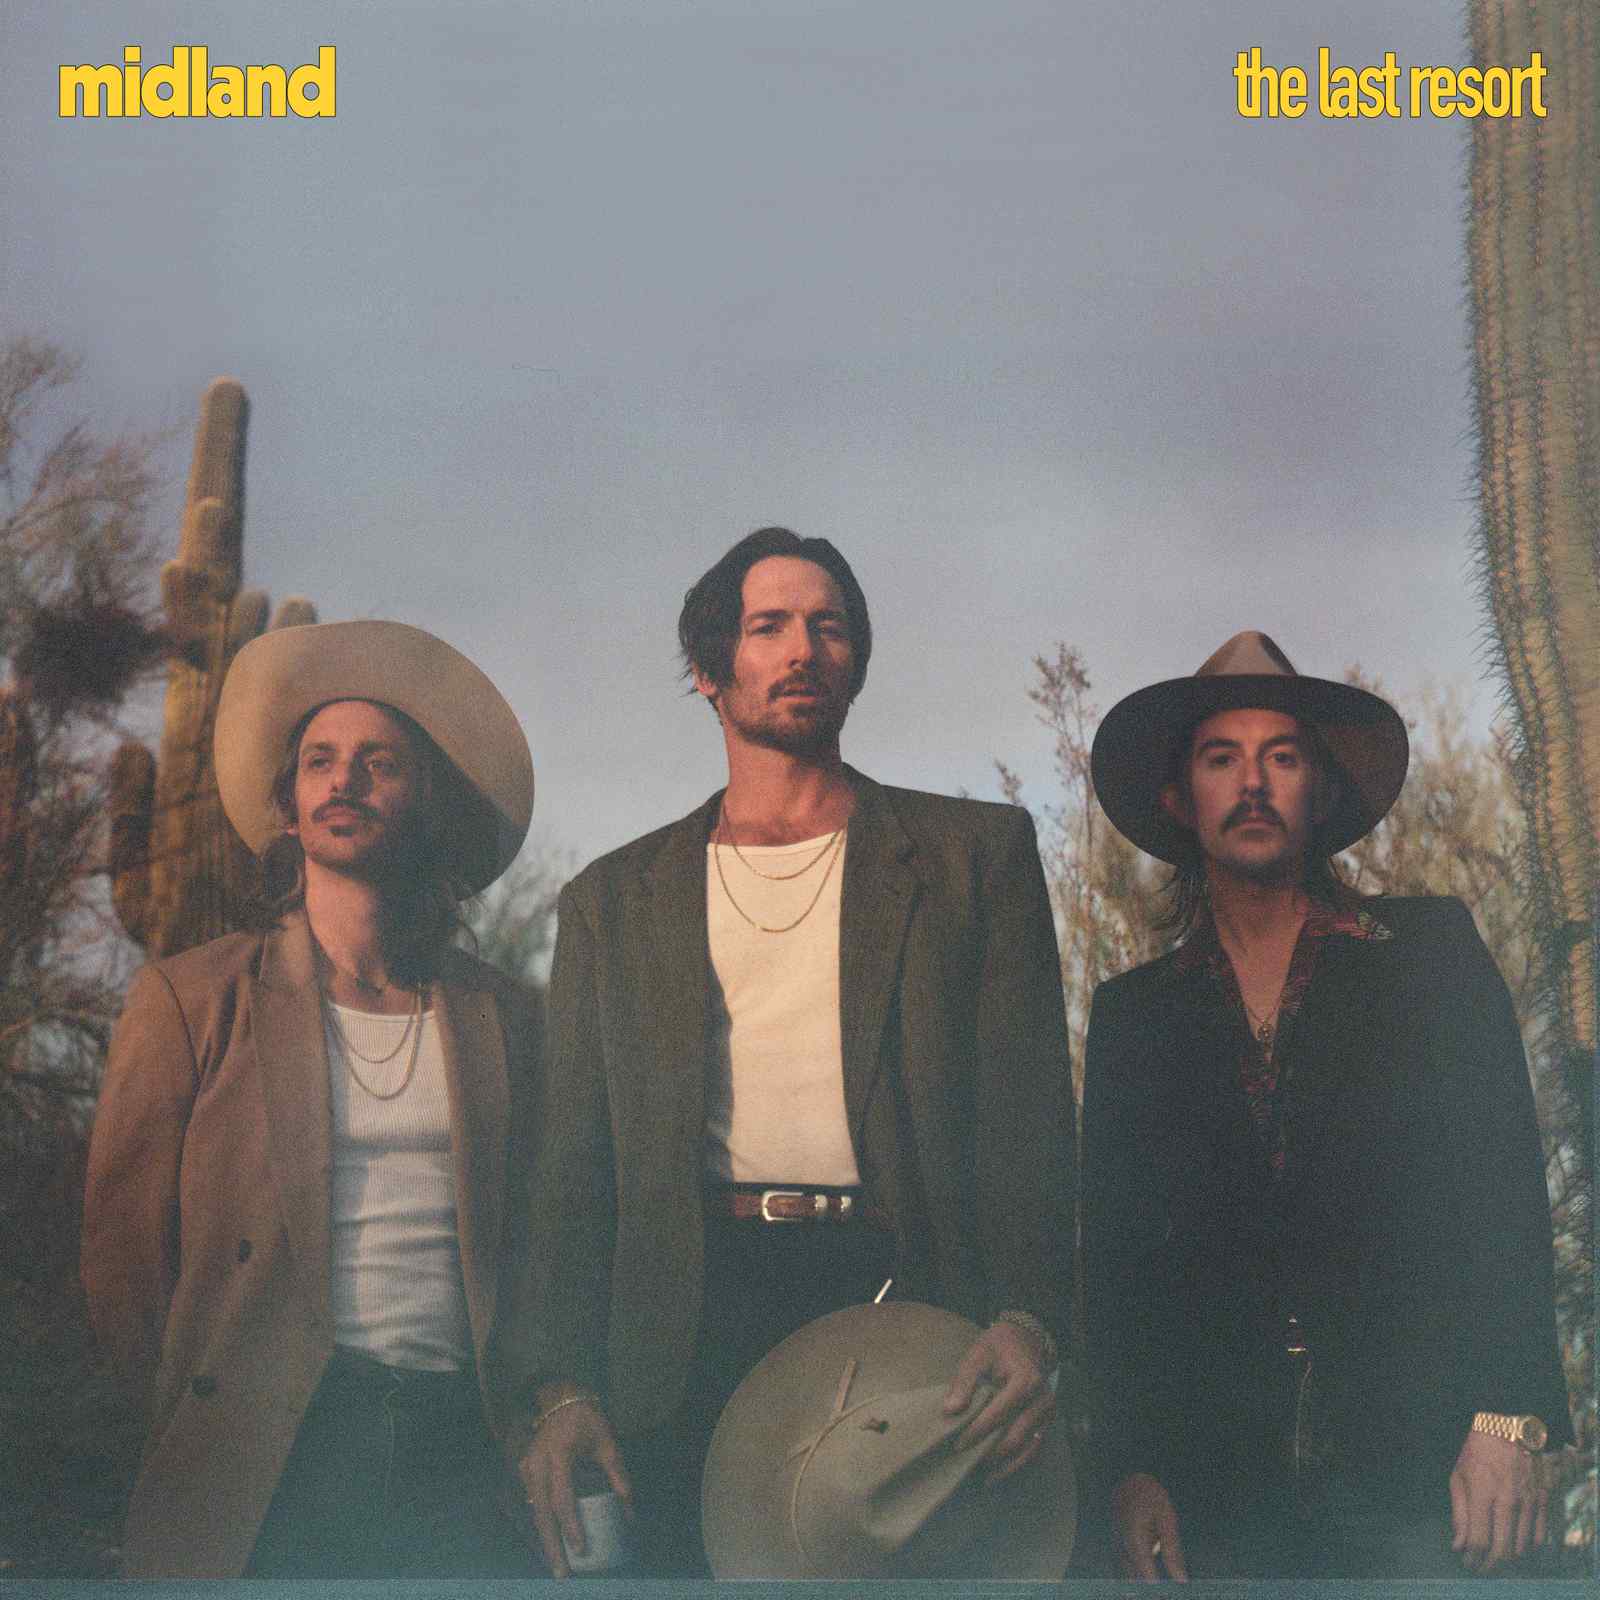 The Last Resort by Midland